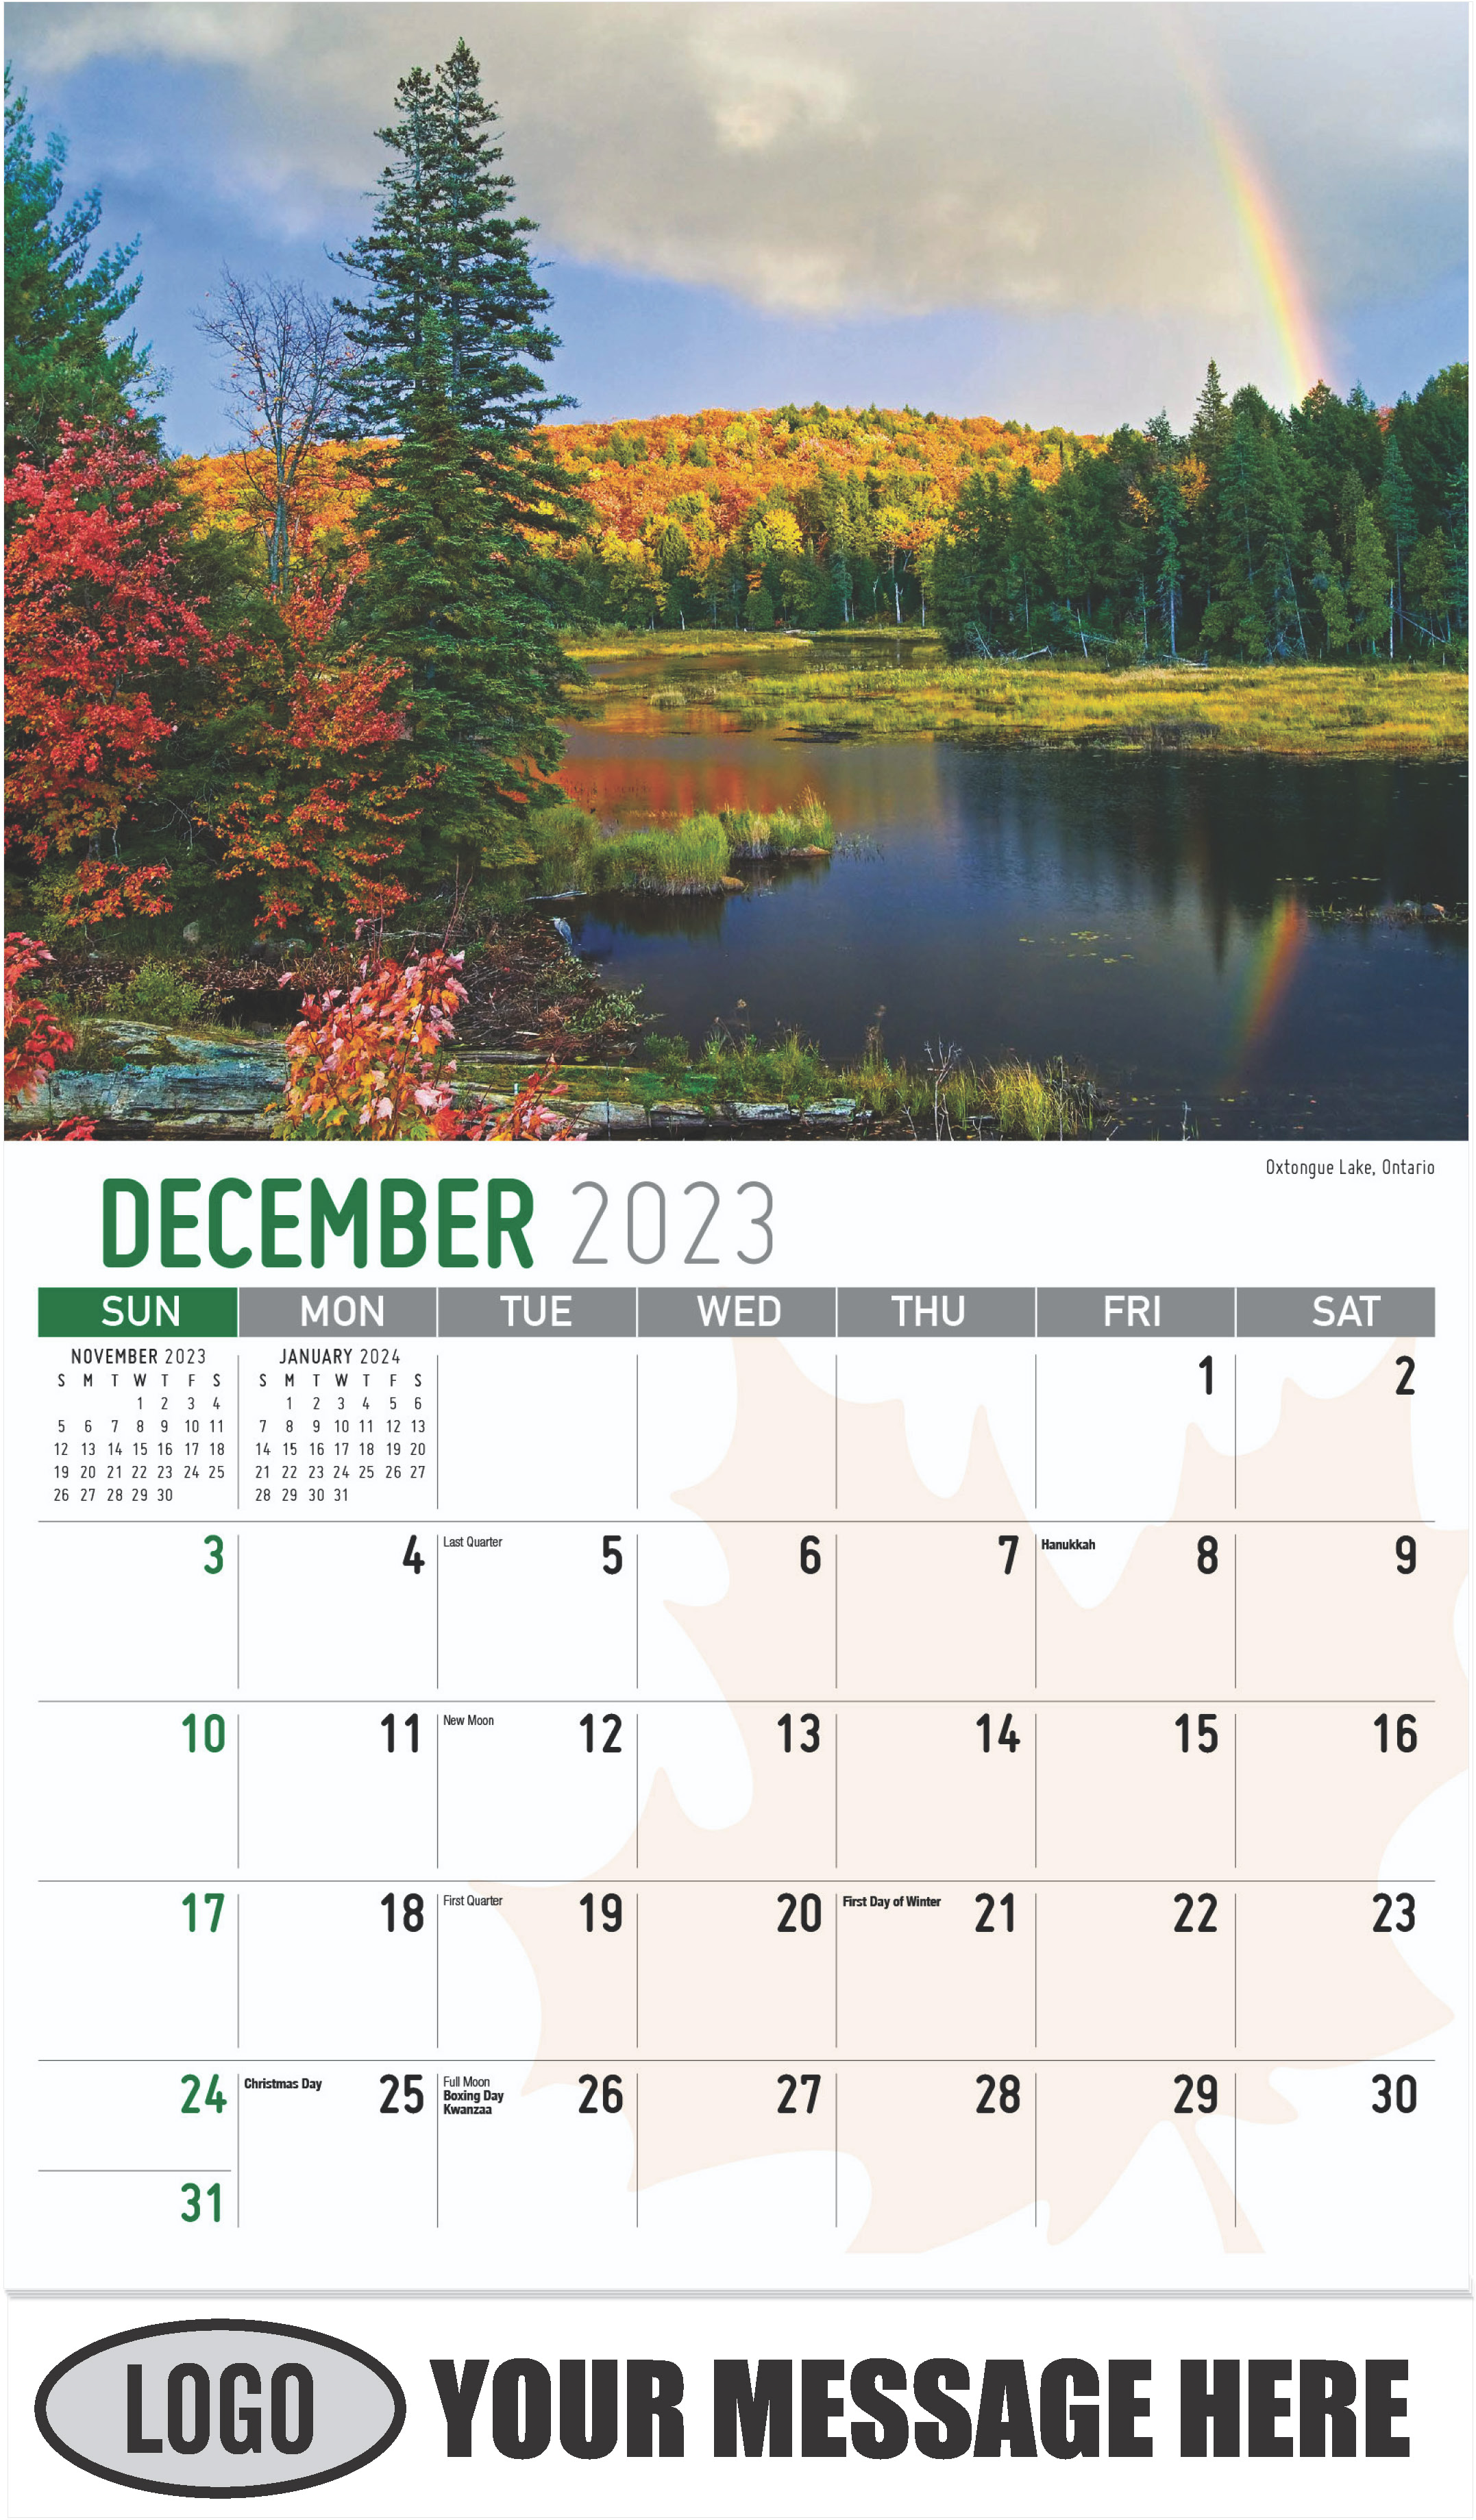 Oxtongue Lake, Ontario - December 2023 - Scenes of Canada 2023 Promotional Calendar